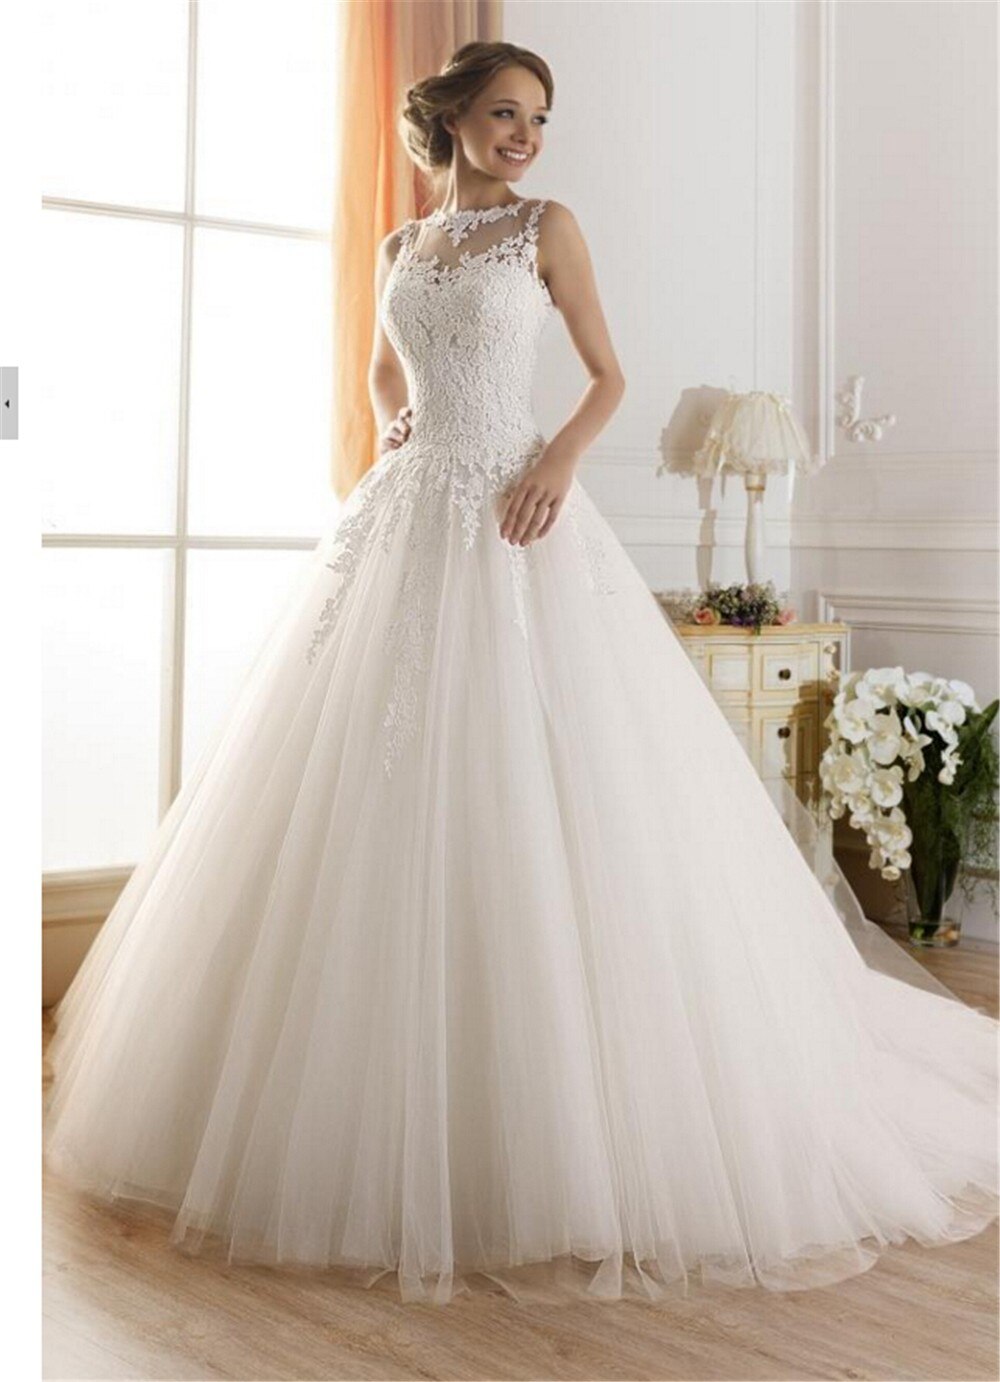 High-neck A-line wedding gown